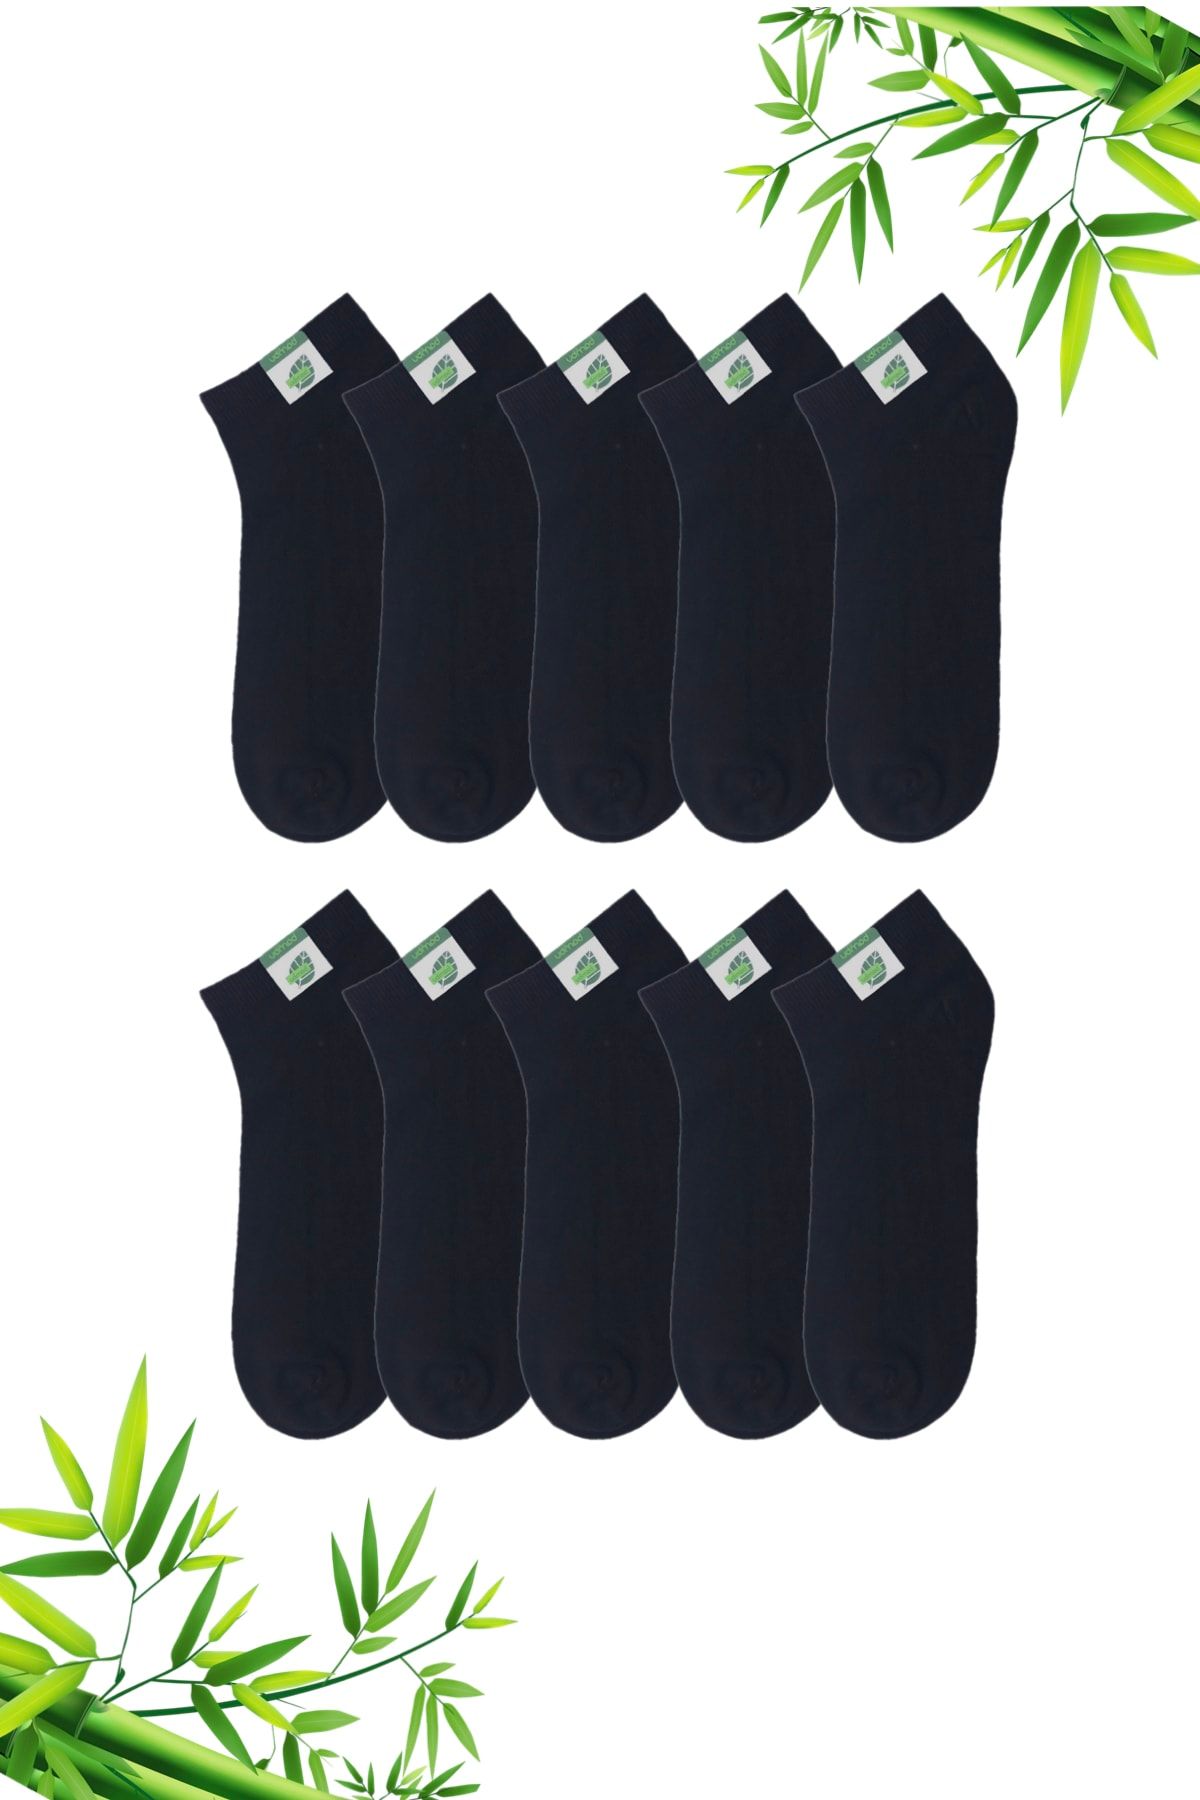 GezBros 10 Çift Erkek Siyah Bambu Patik Kısa Çorap